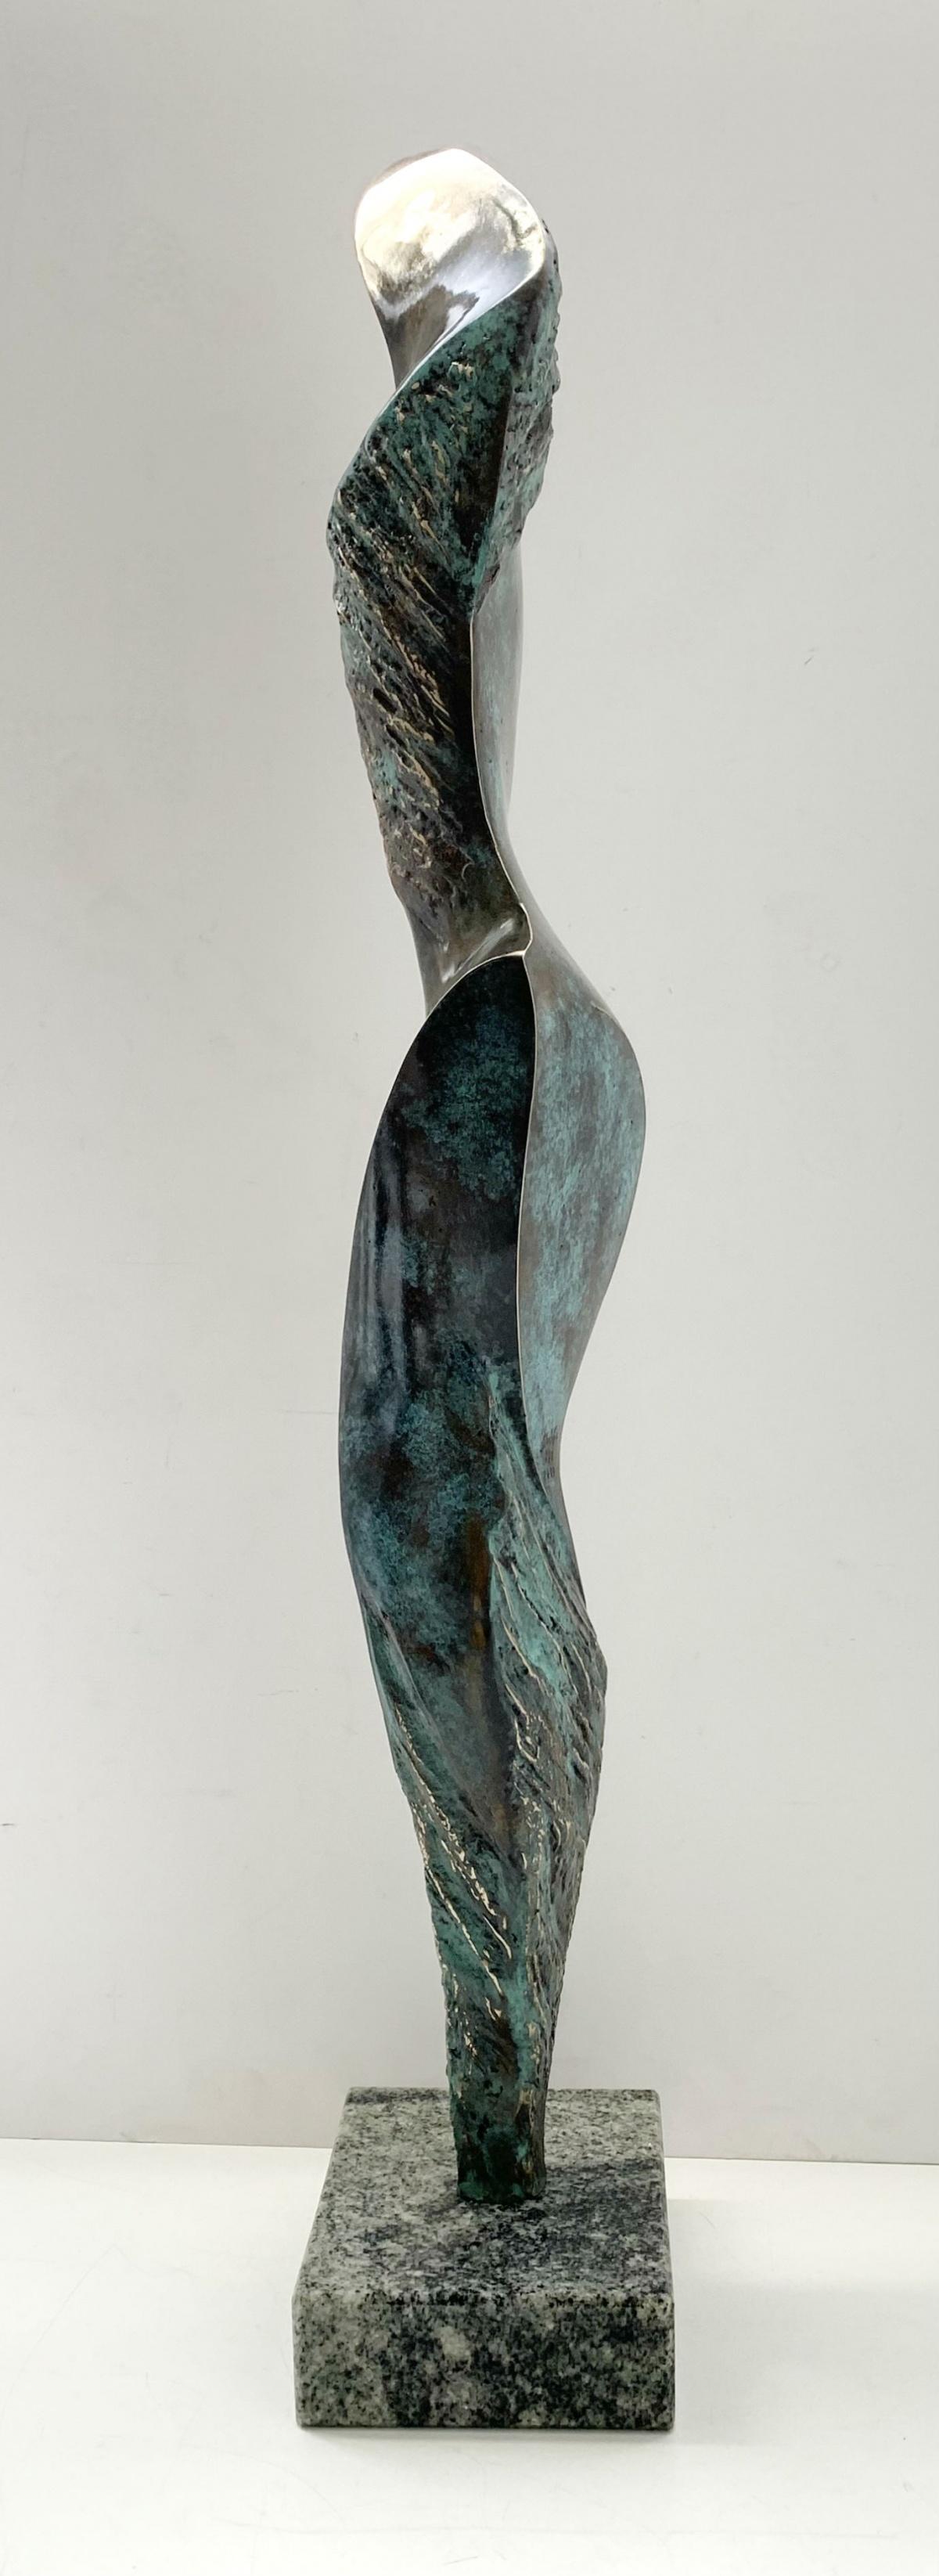 Muse - XXI century Contemporary bronze sculpture, Abstract & figurative - Gold Figurative Sculpture by Stanisław Wysocki